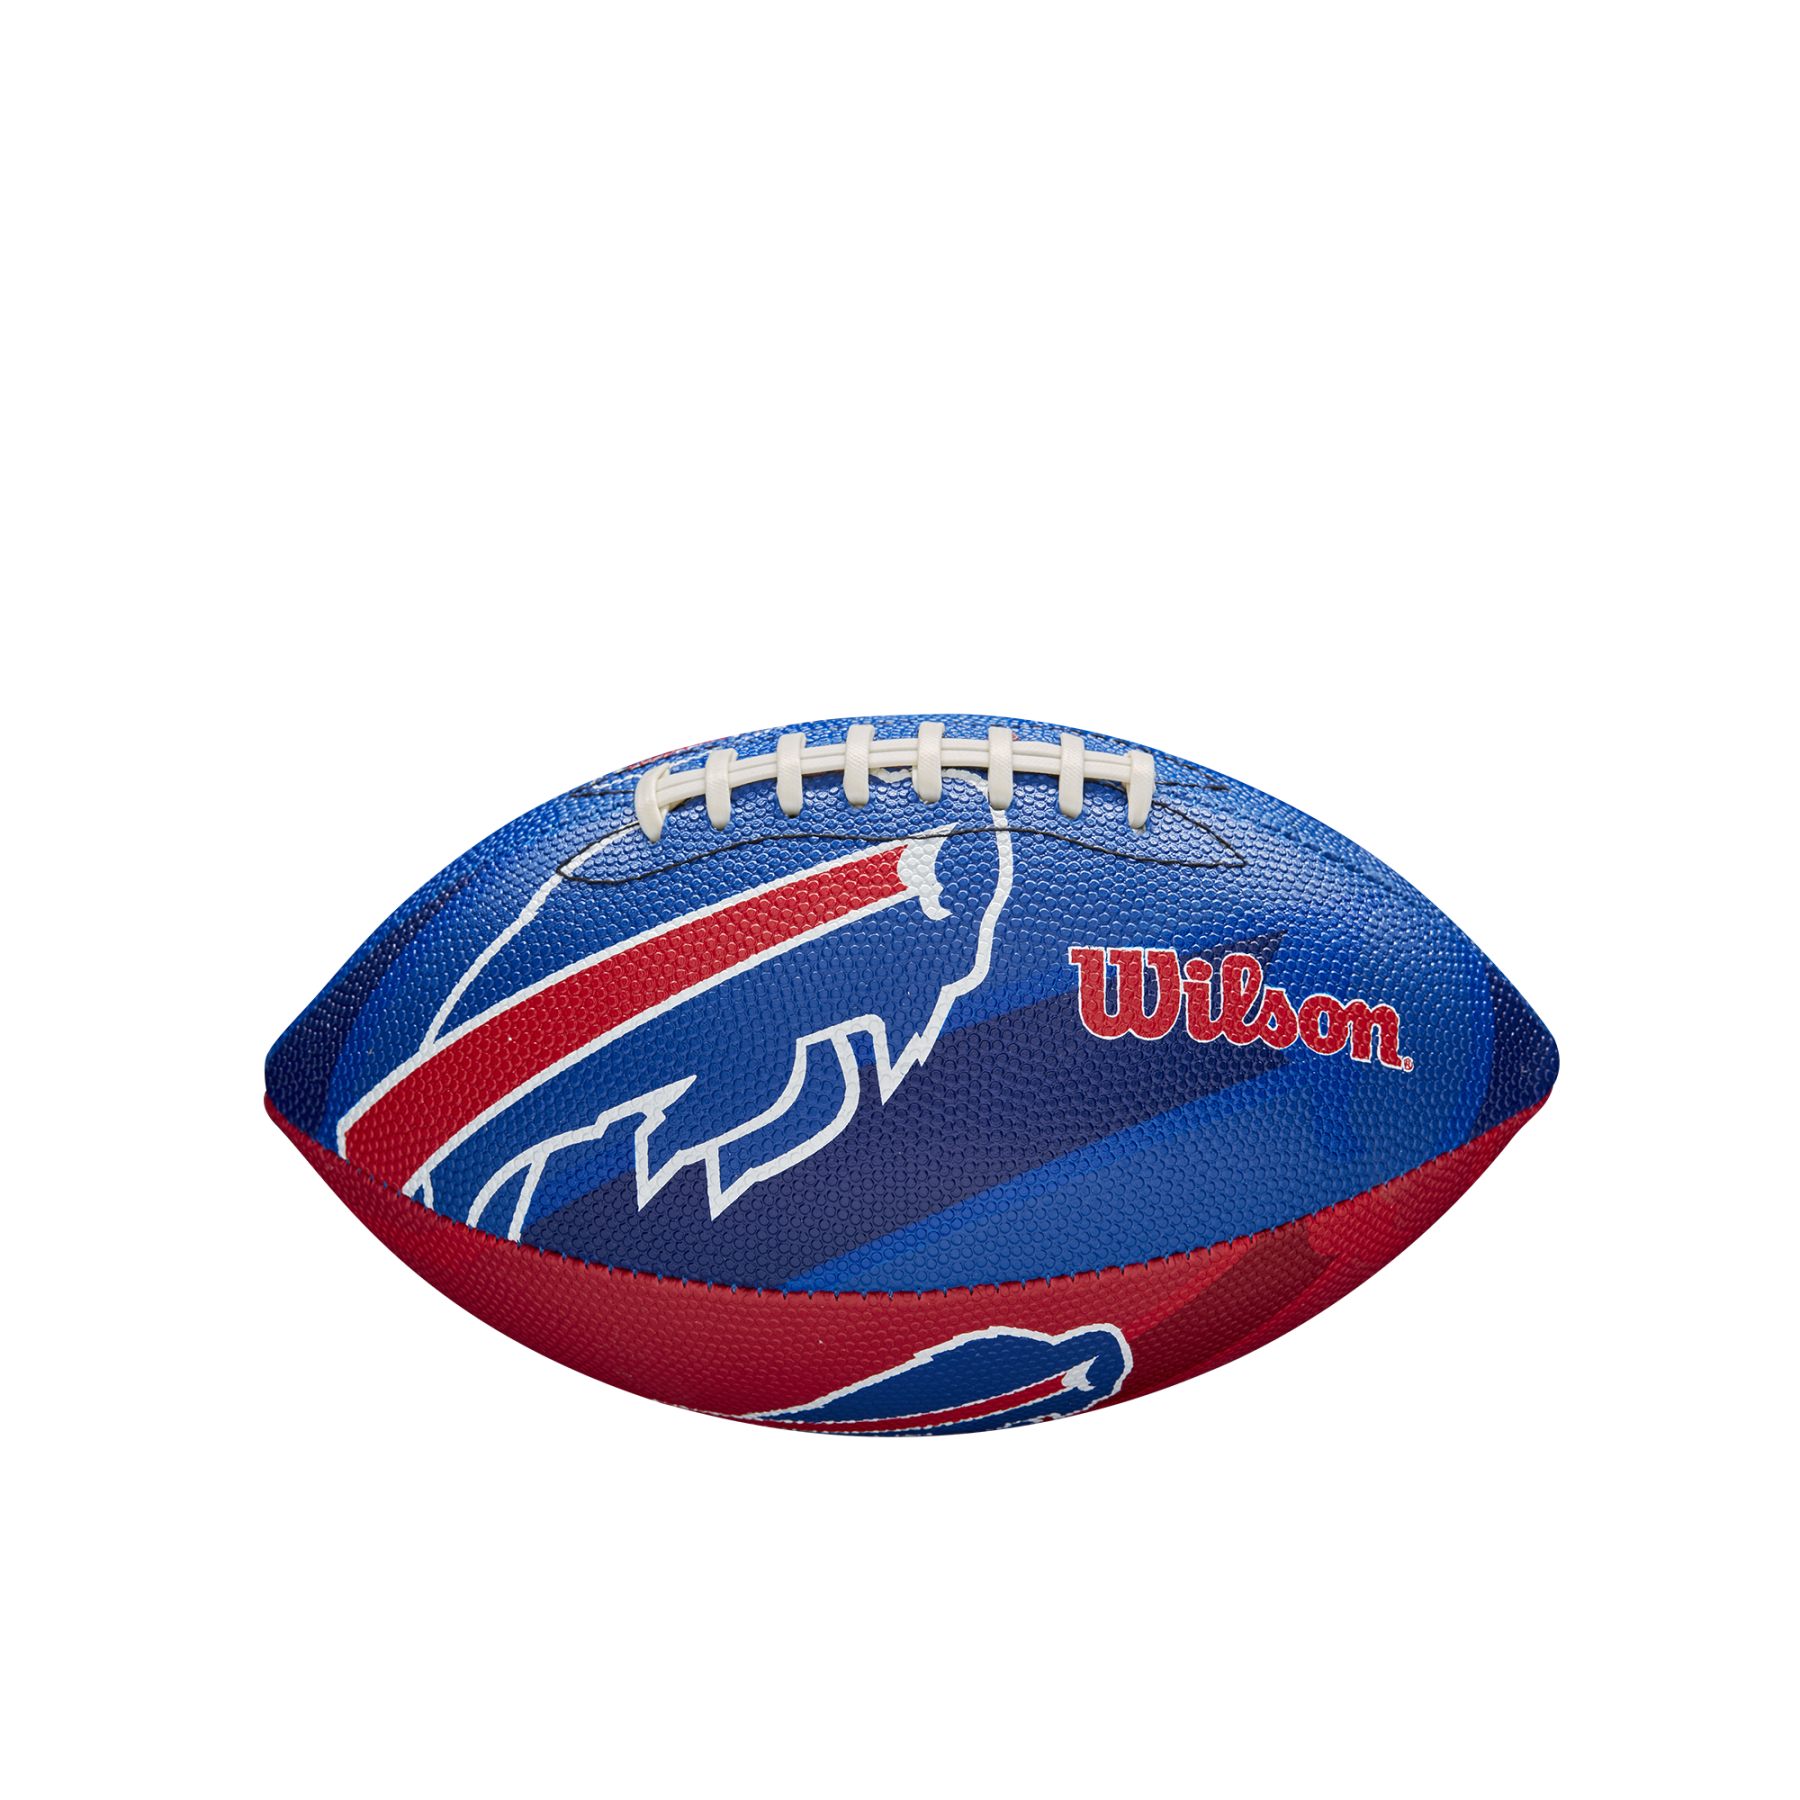 Children's ball Wilson Bills NFL Logo